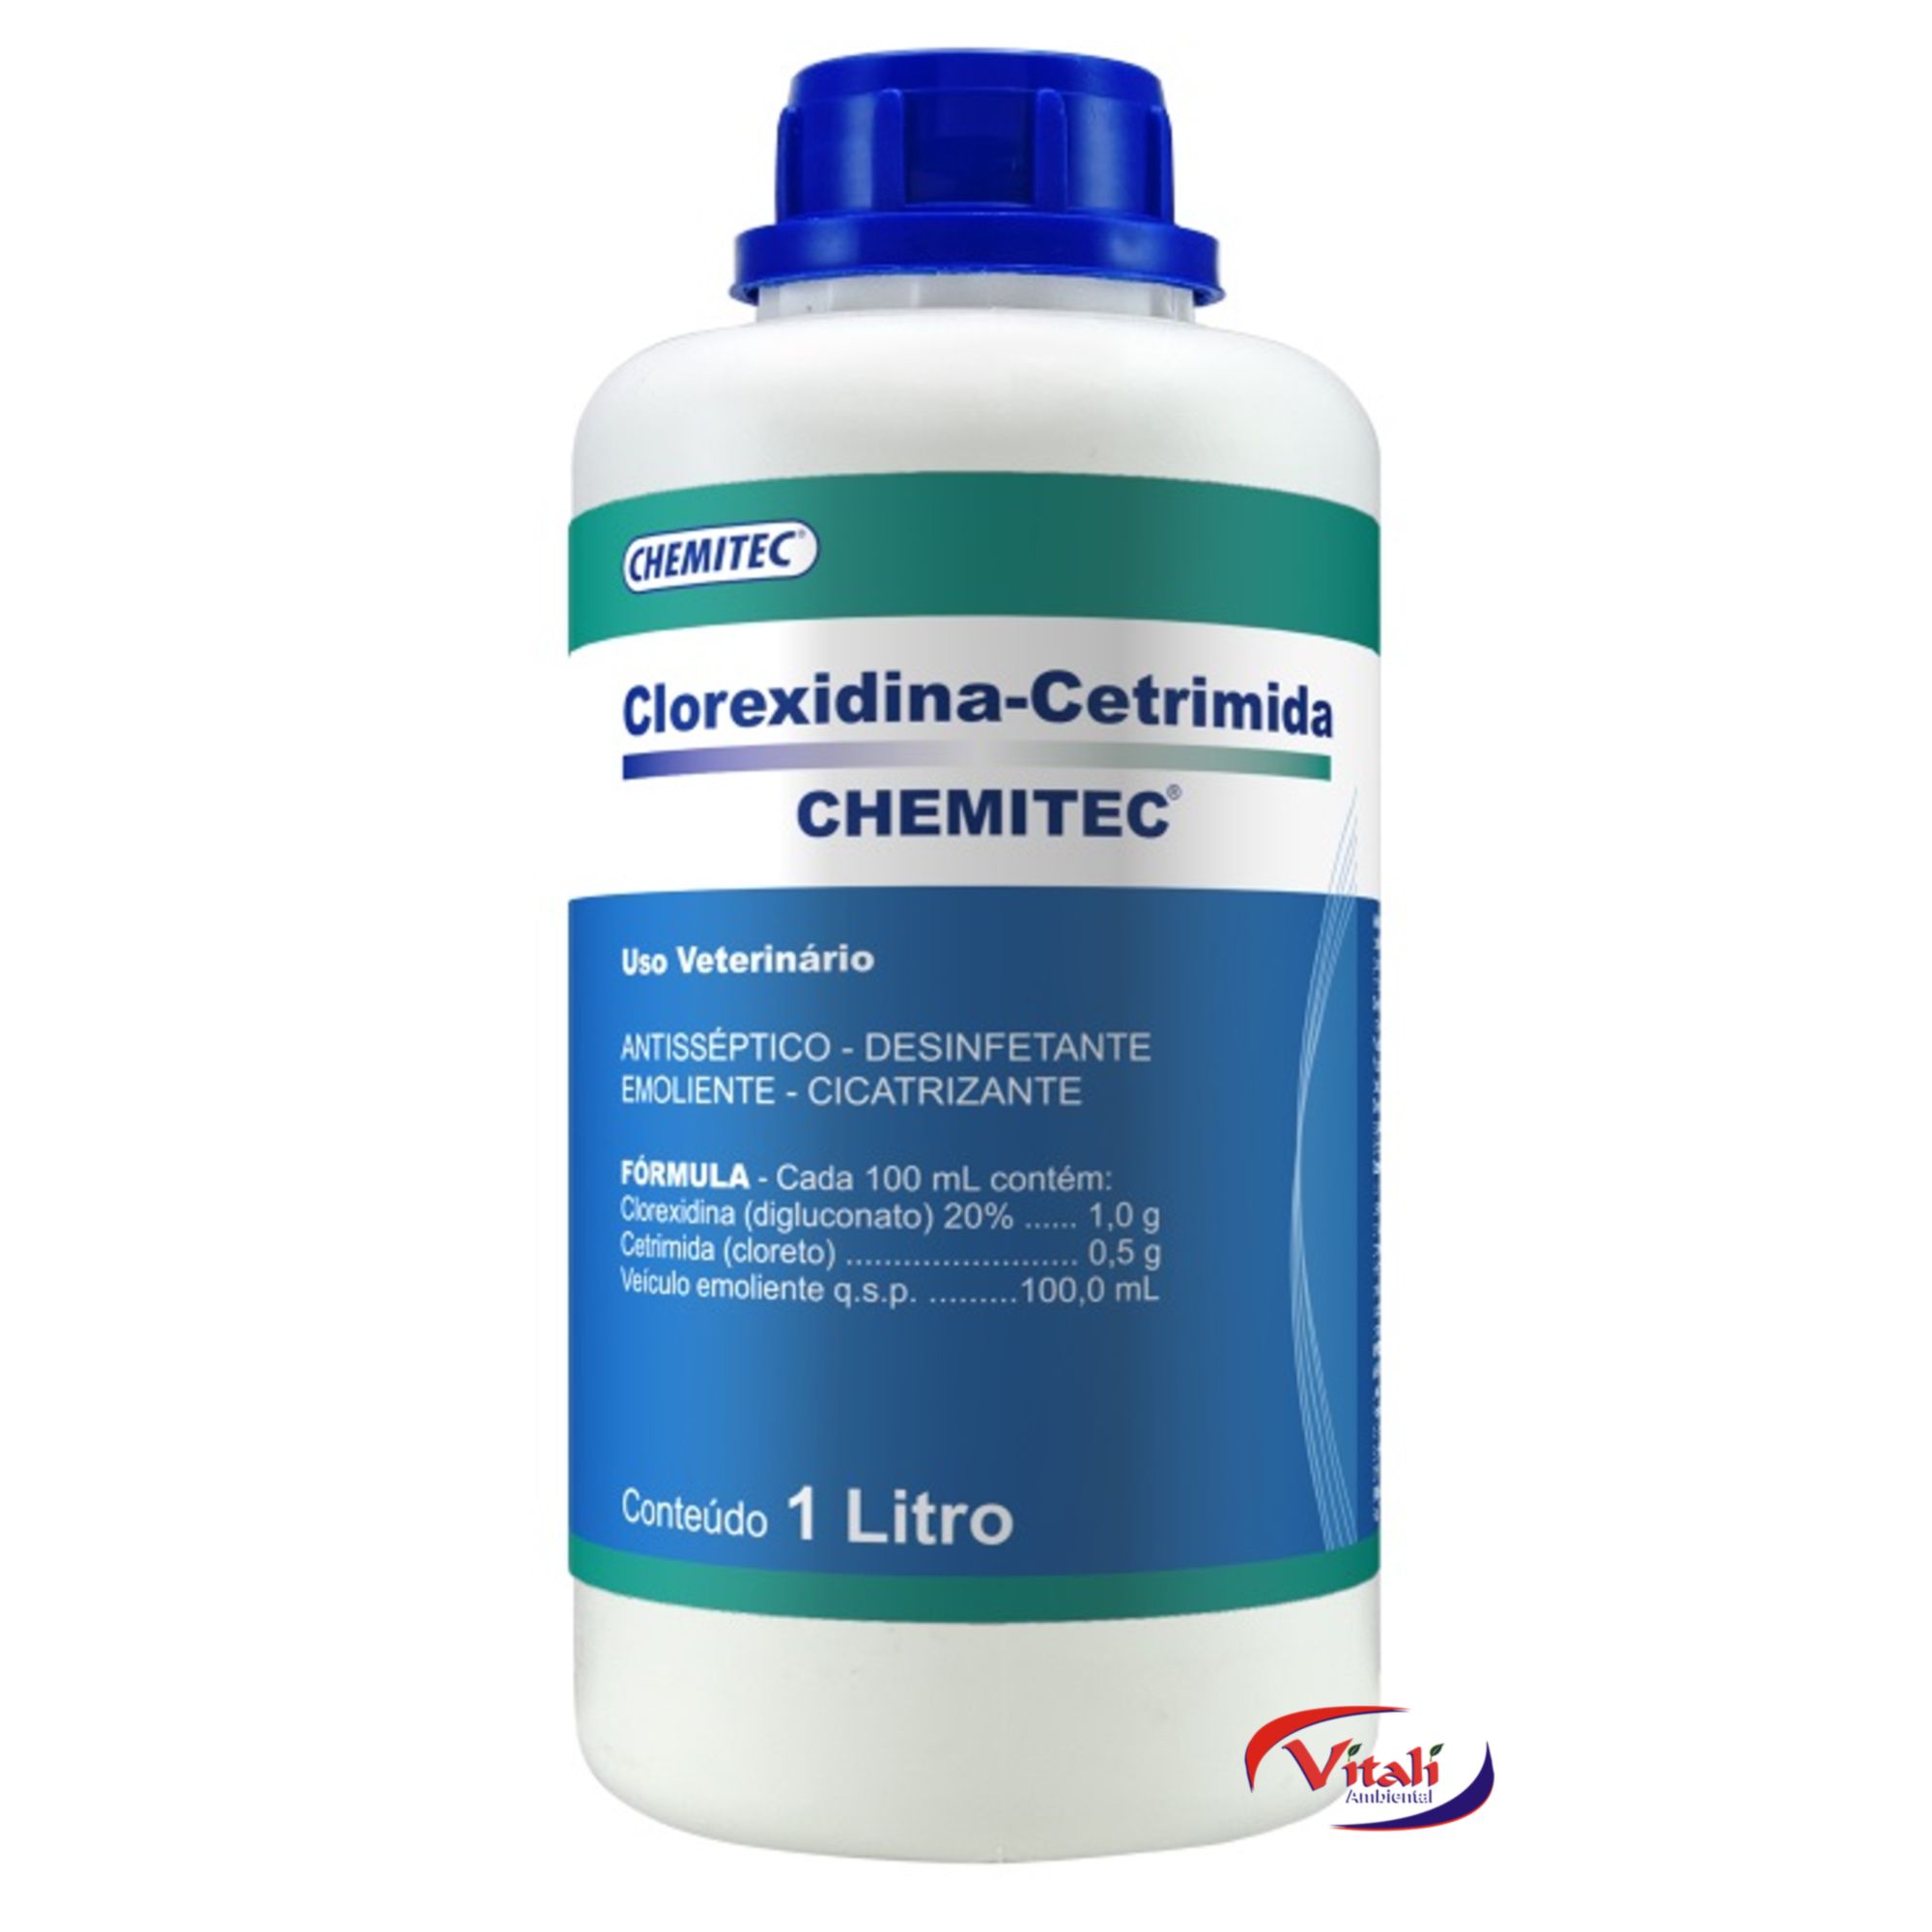 Clorexidina-Cetrimida 1 Litro